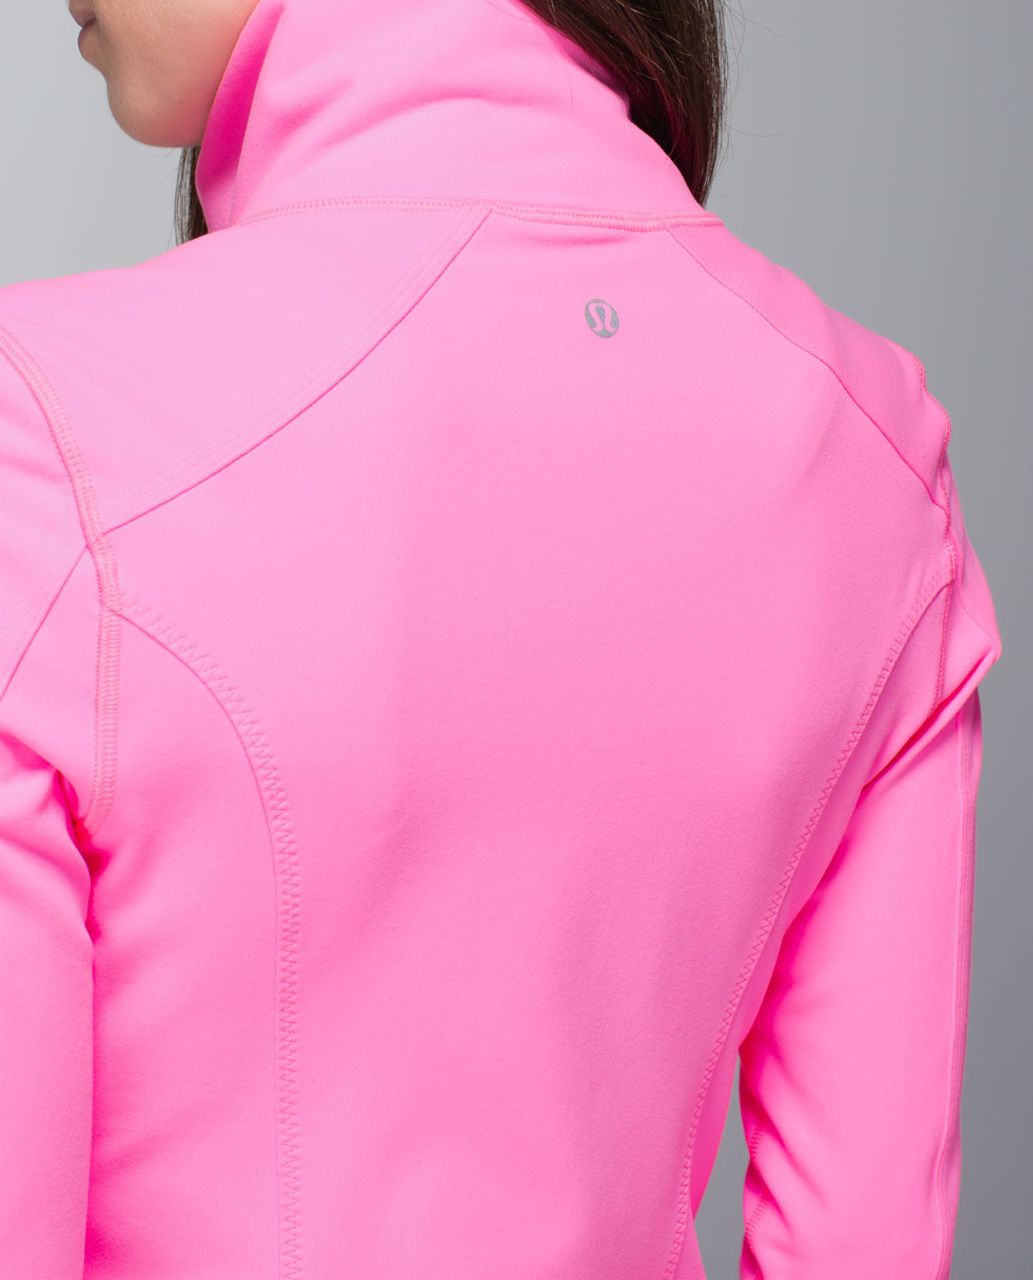 My Superficial Endeavors: Lululemon Define Jacket in Pow Pink!